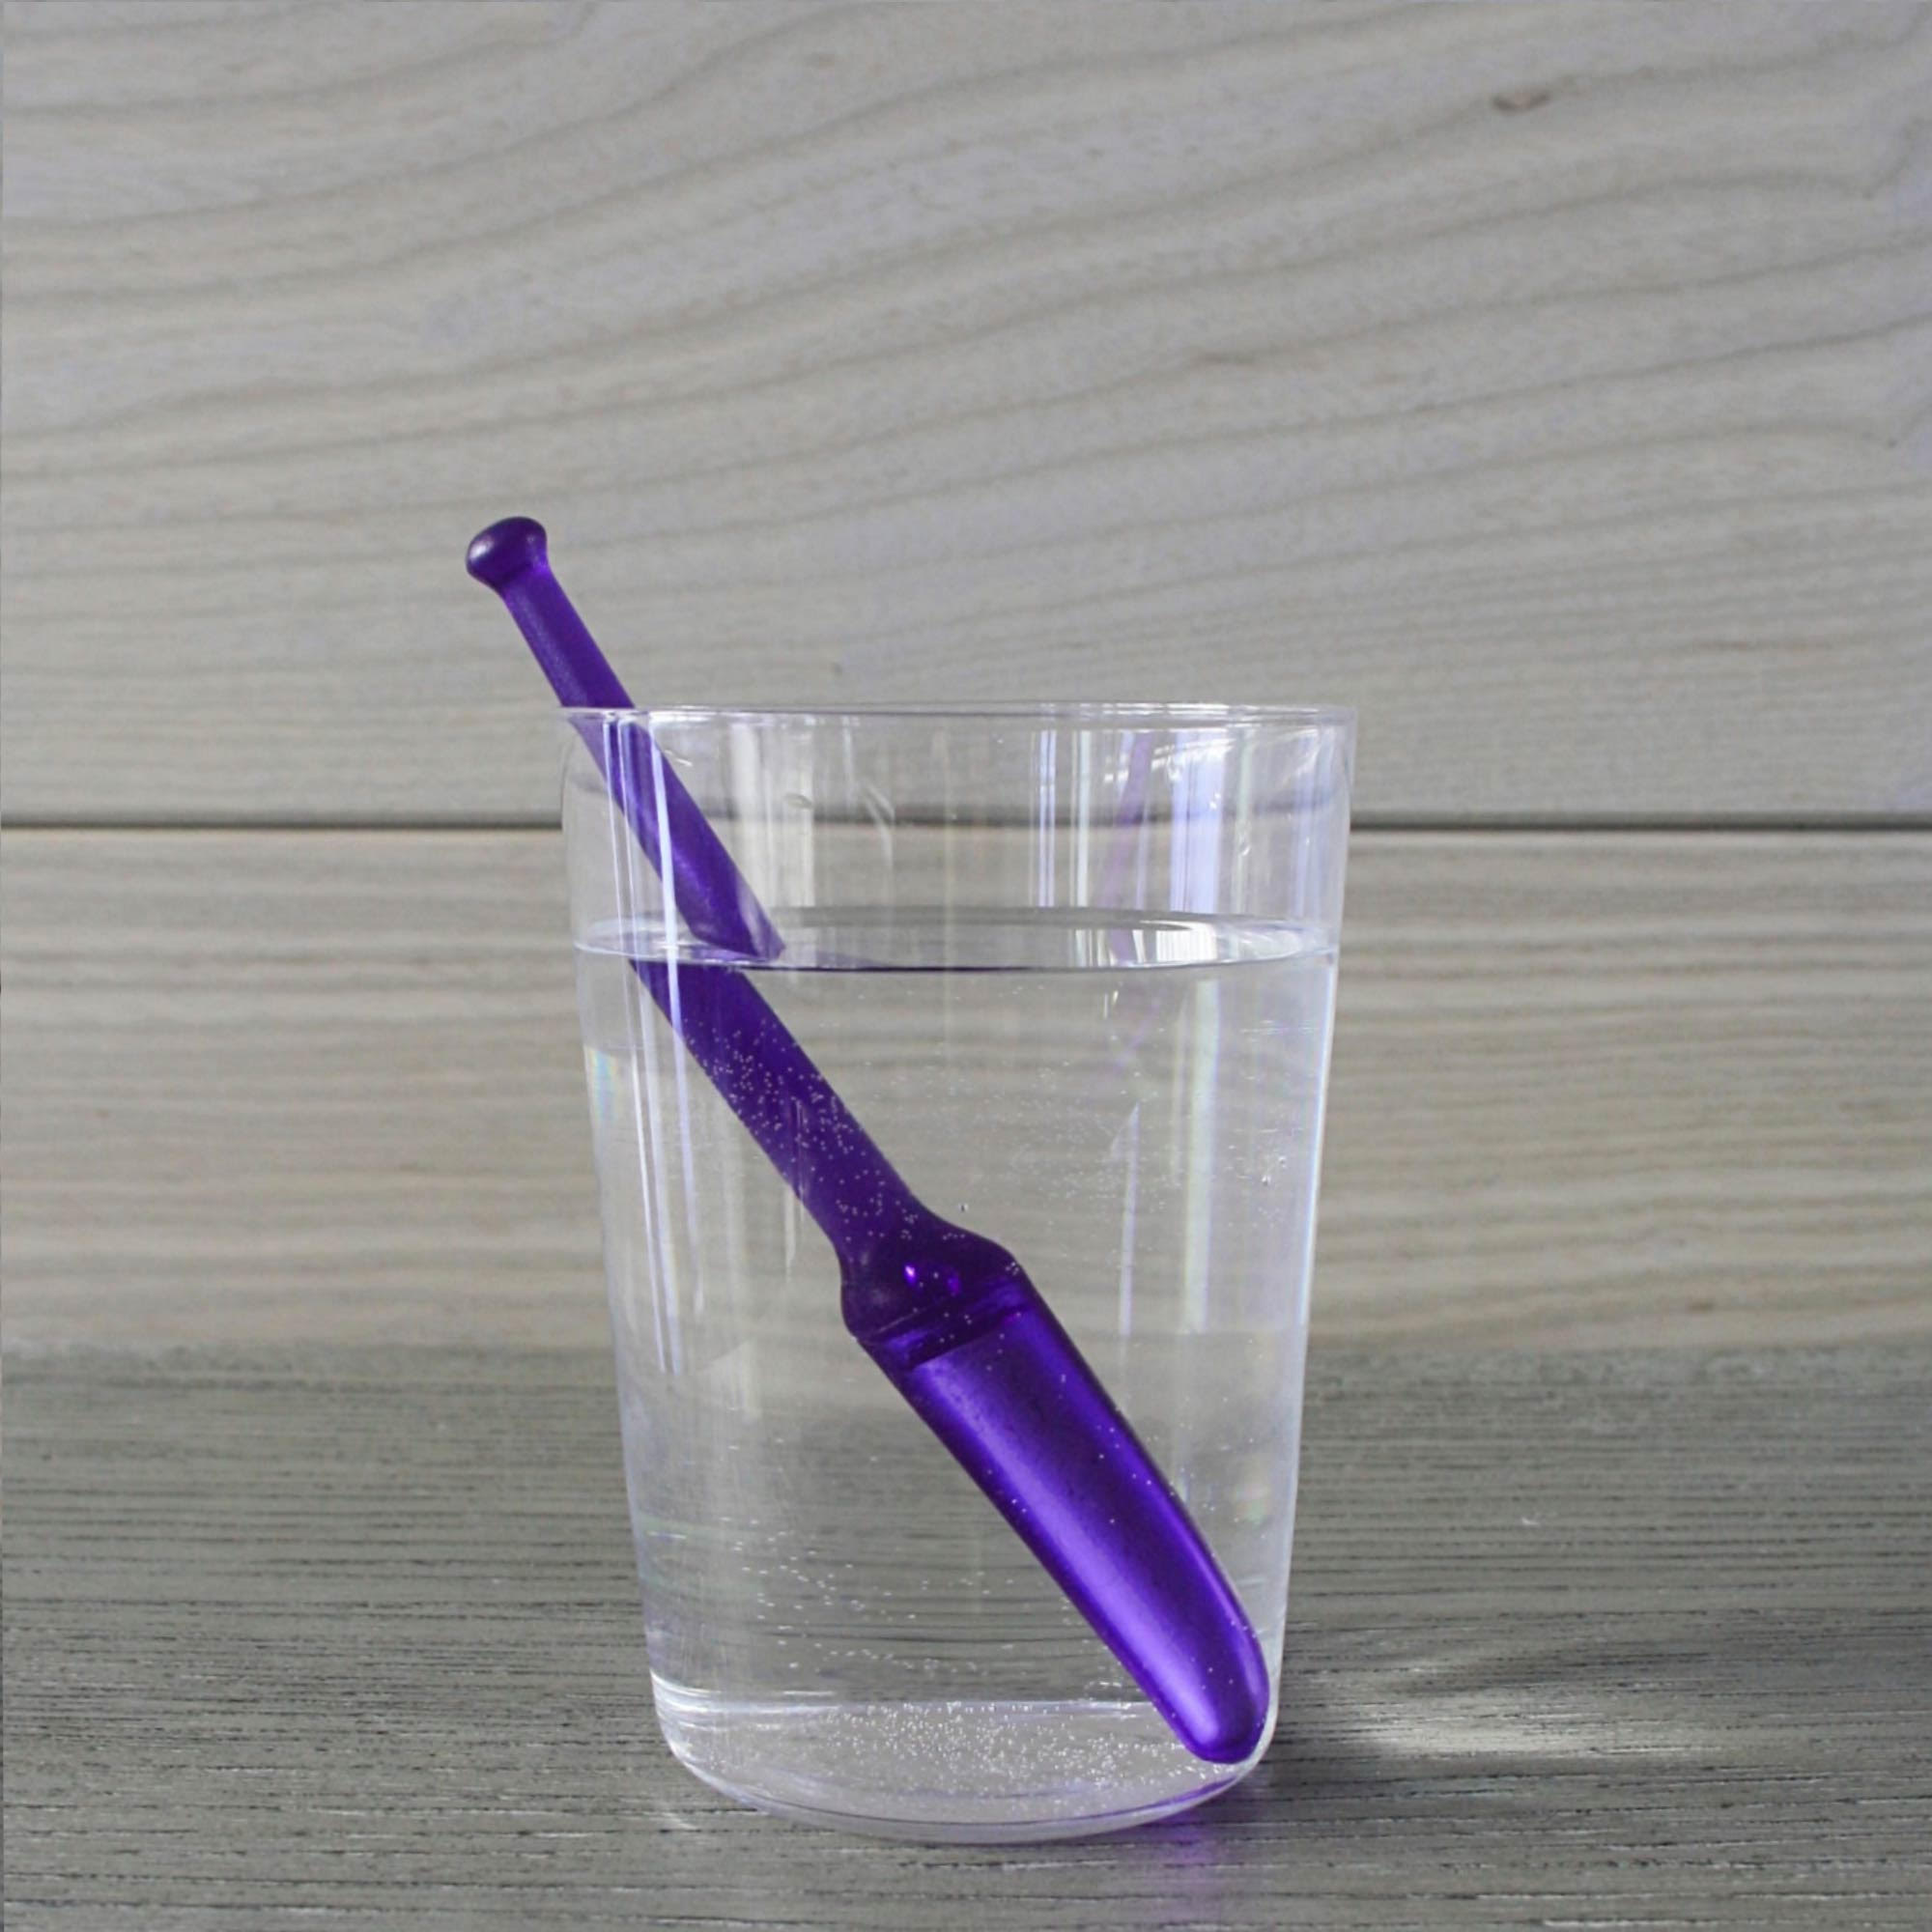 Zen Master StirWand purple stirwand in glass filled with water, on wood surface